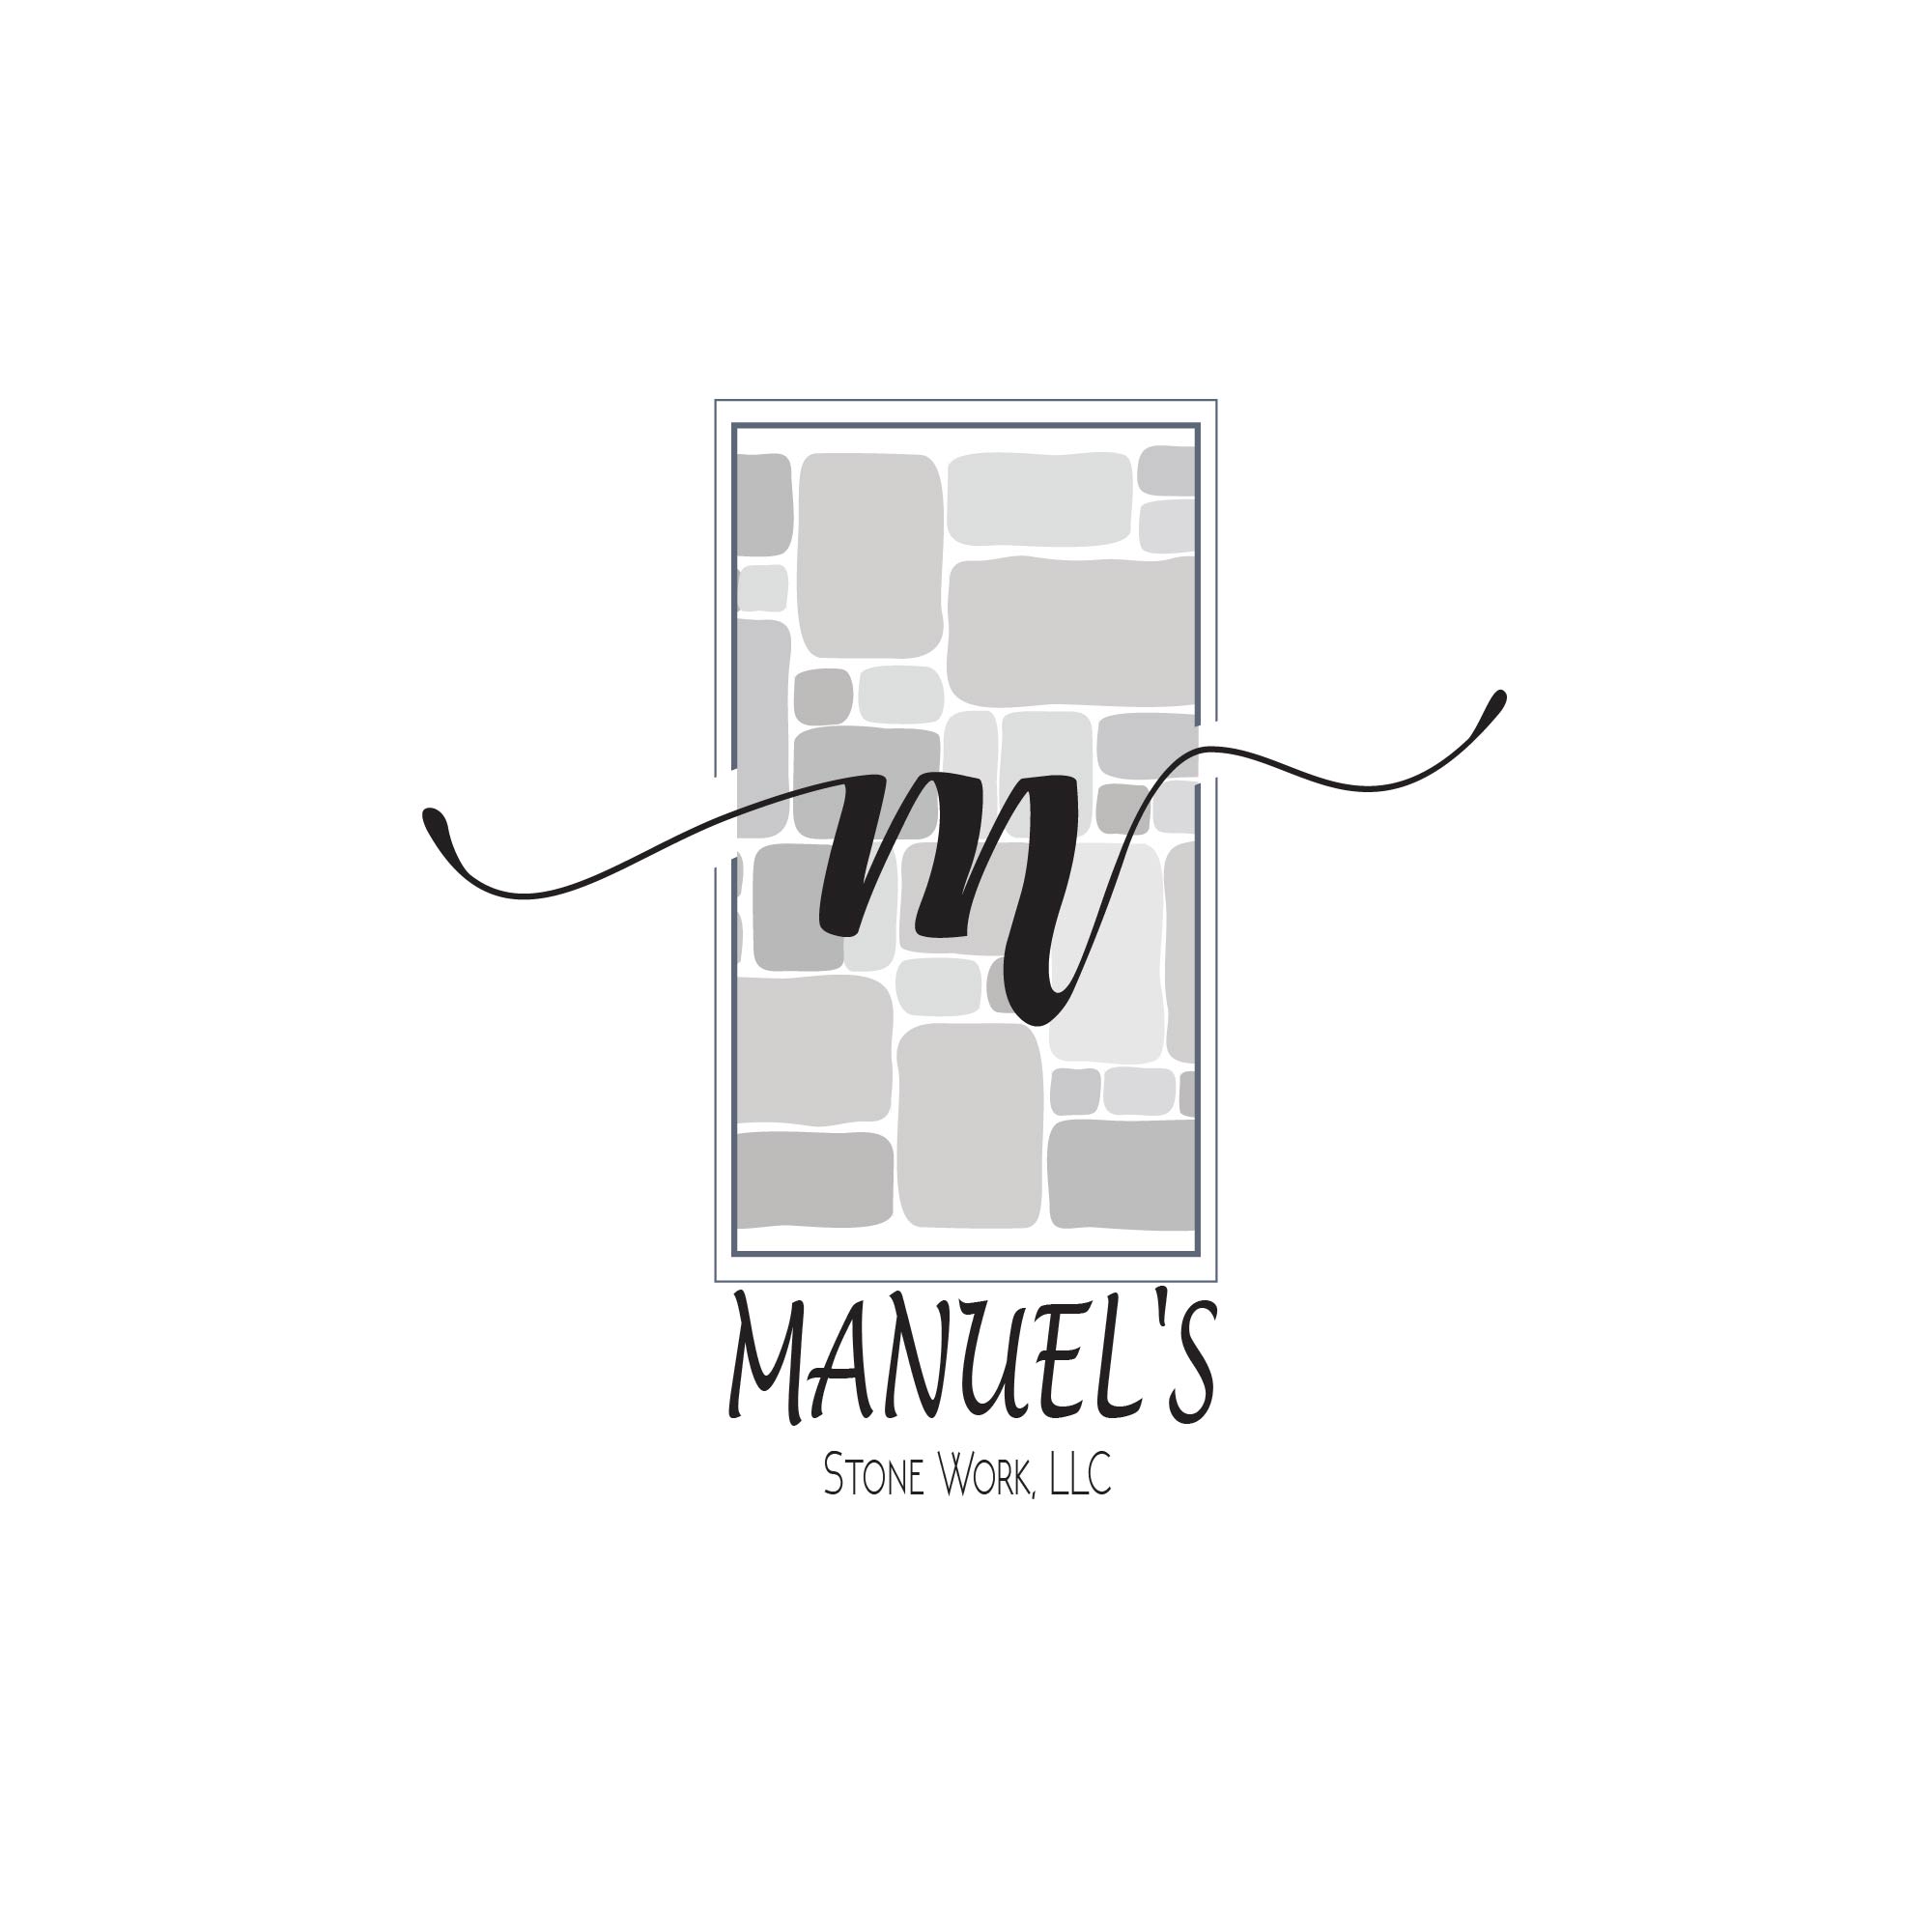 Manuel's Stone Work, LLC Logo